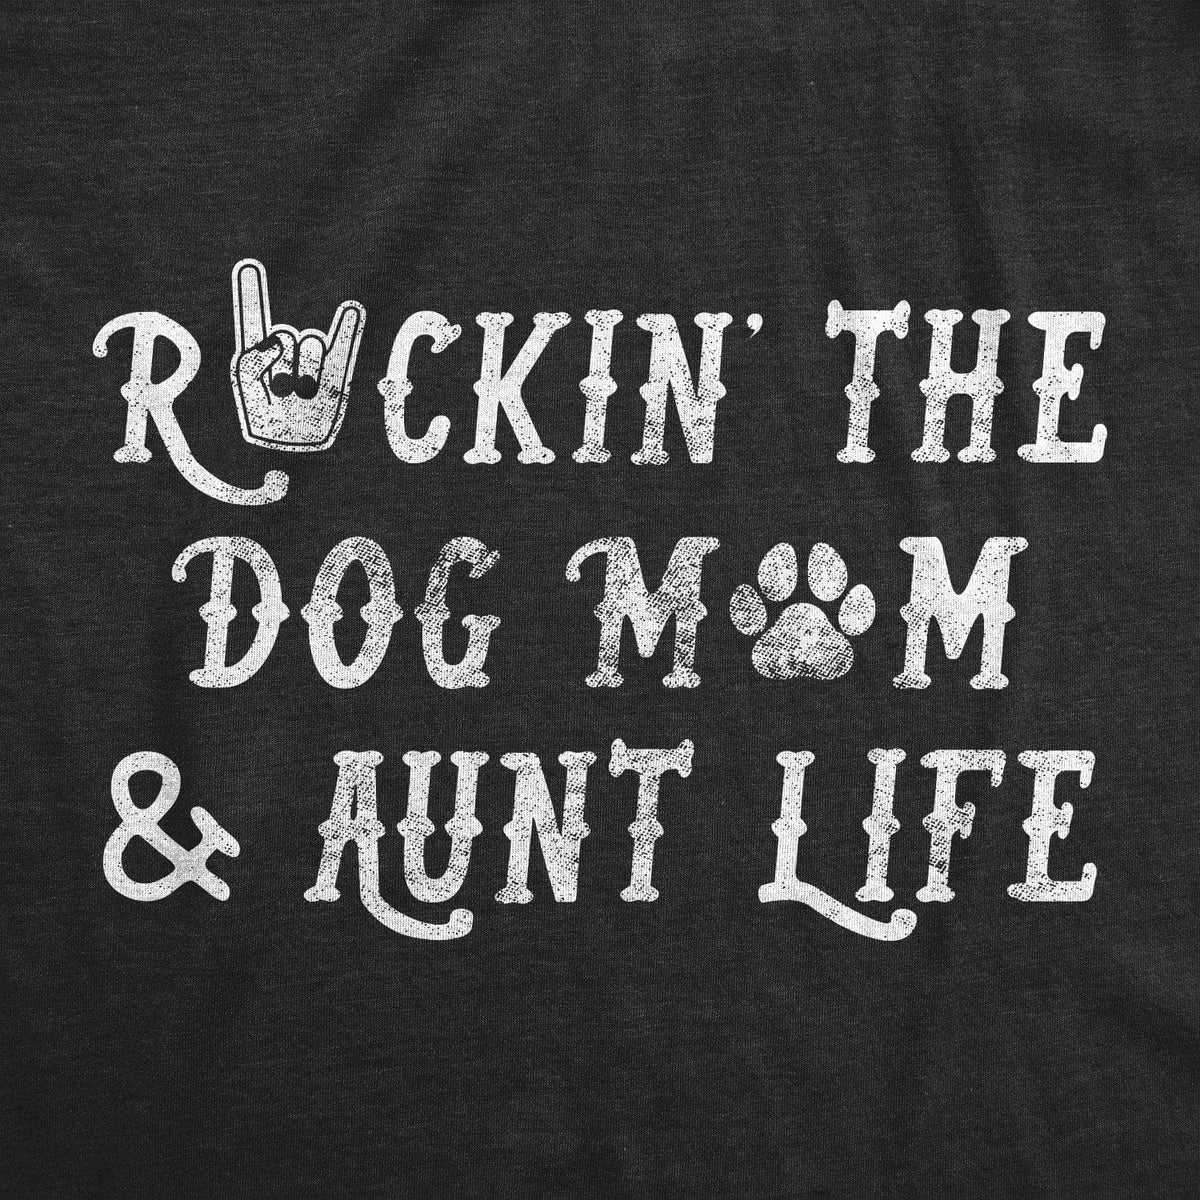 Rockin The Dog Mom And Aunt Life Women&#39;s Tshirt - Crazy Dog T-Shirts